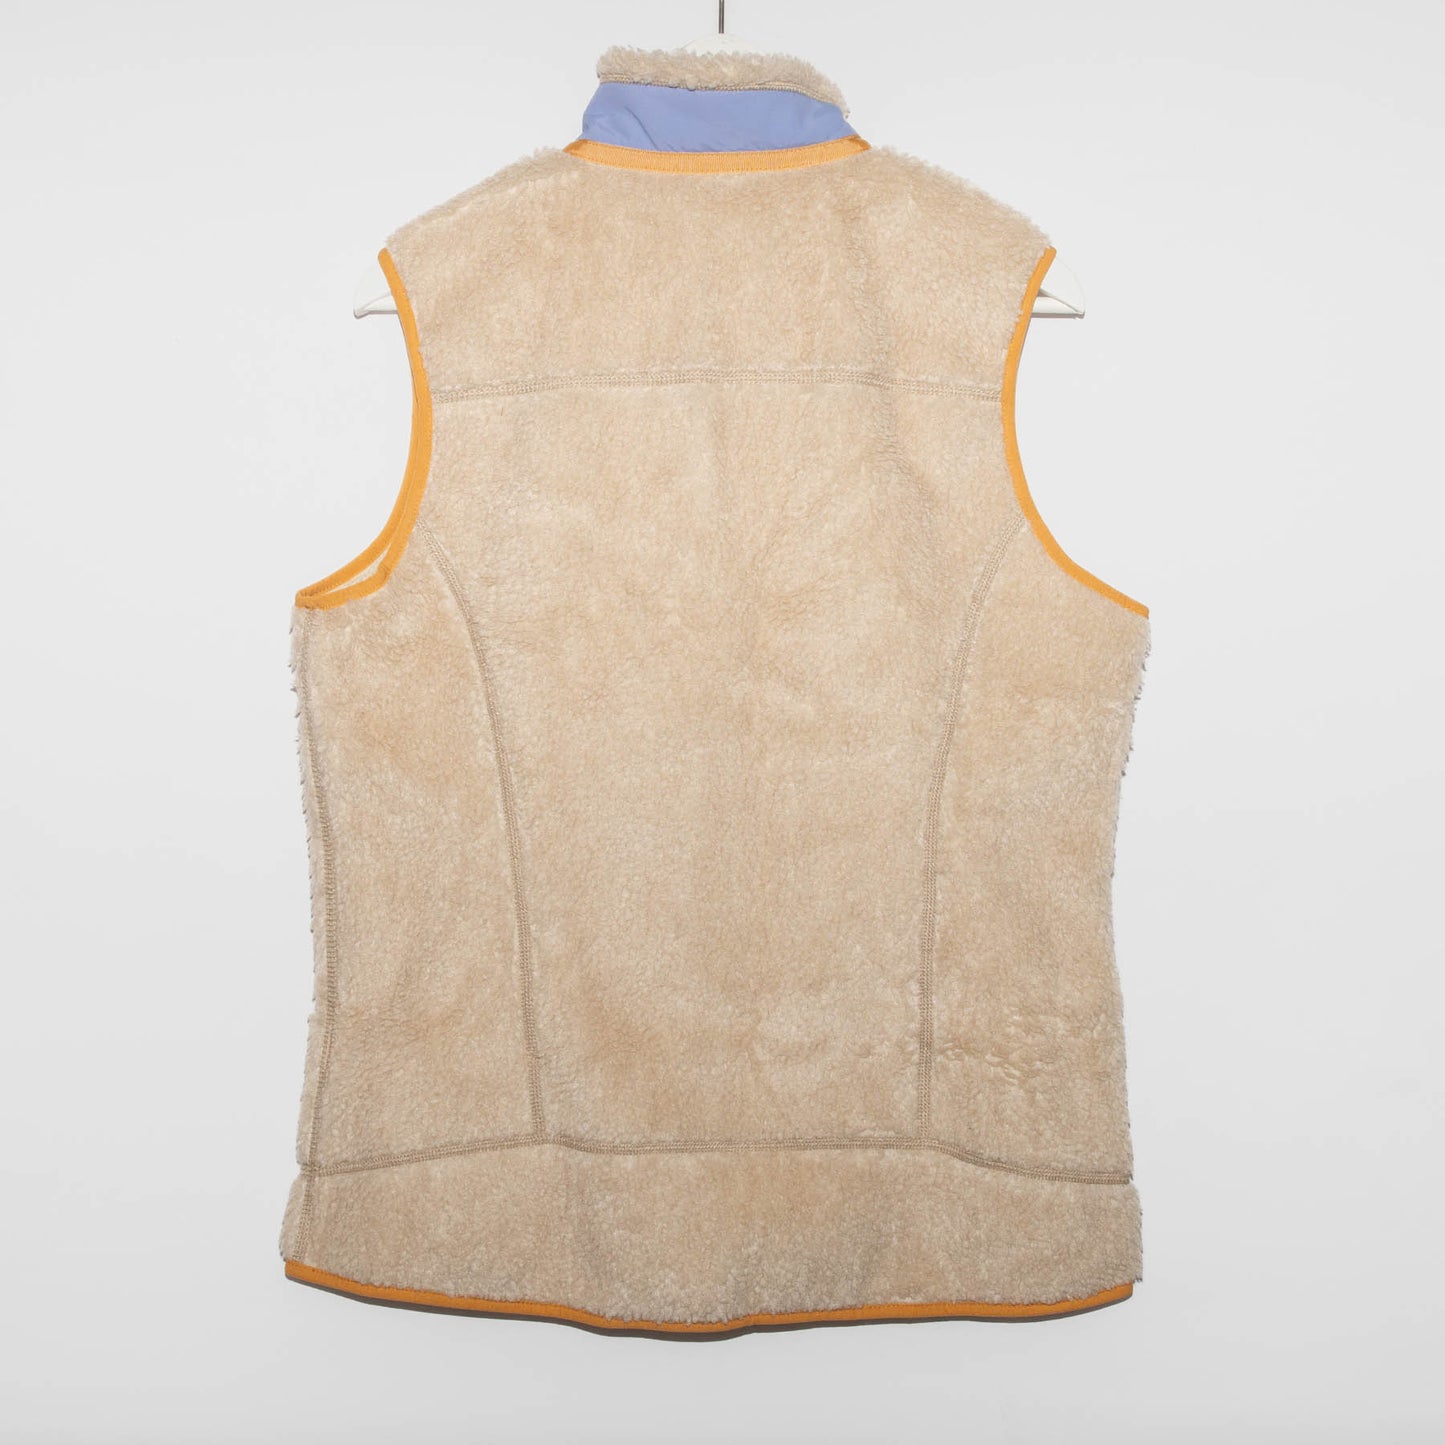 Patagonia - Classic Retro-X Fleece Vest